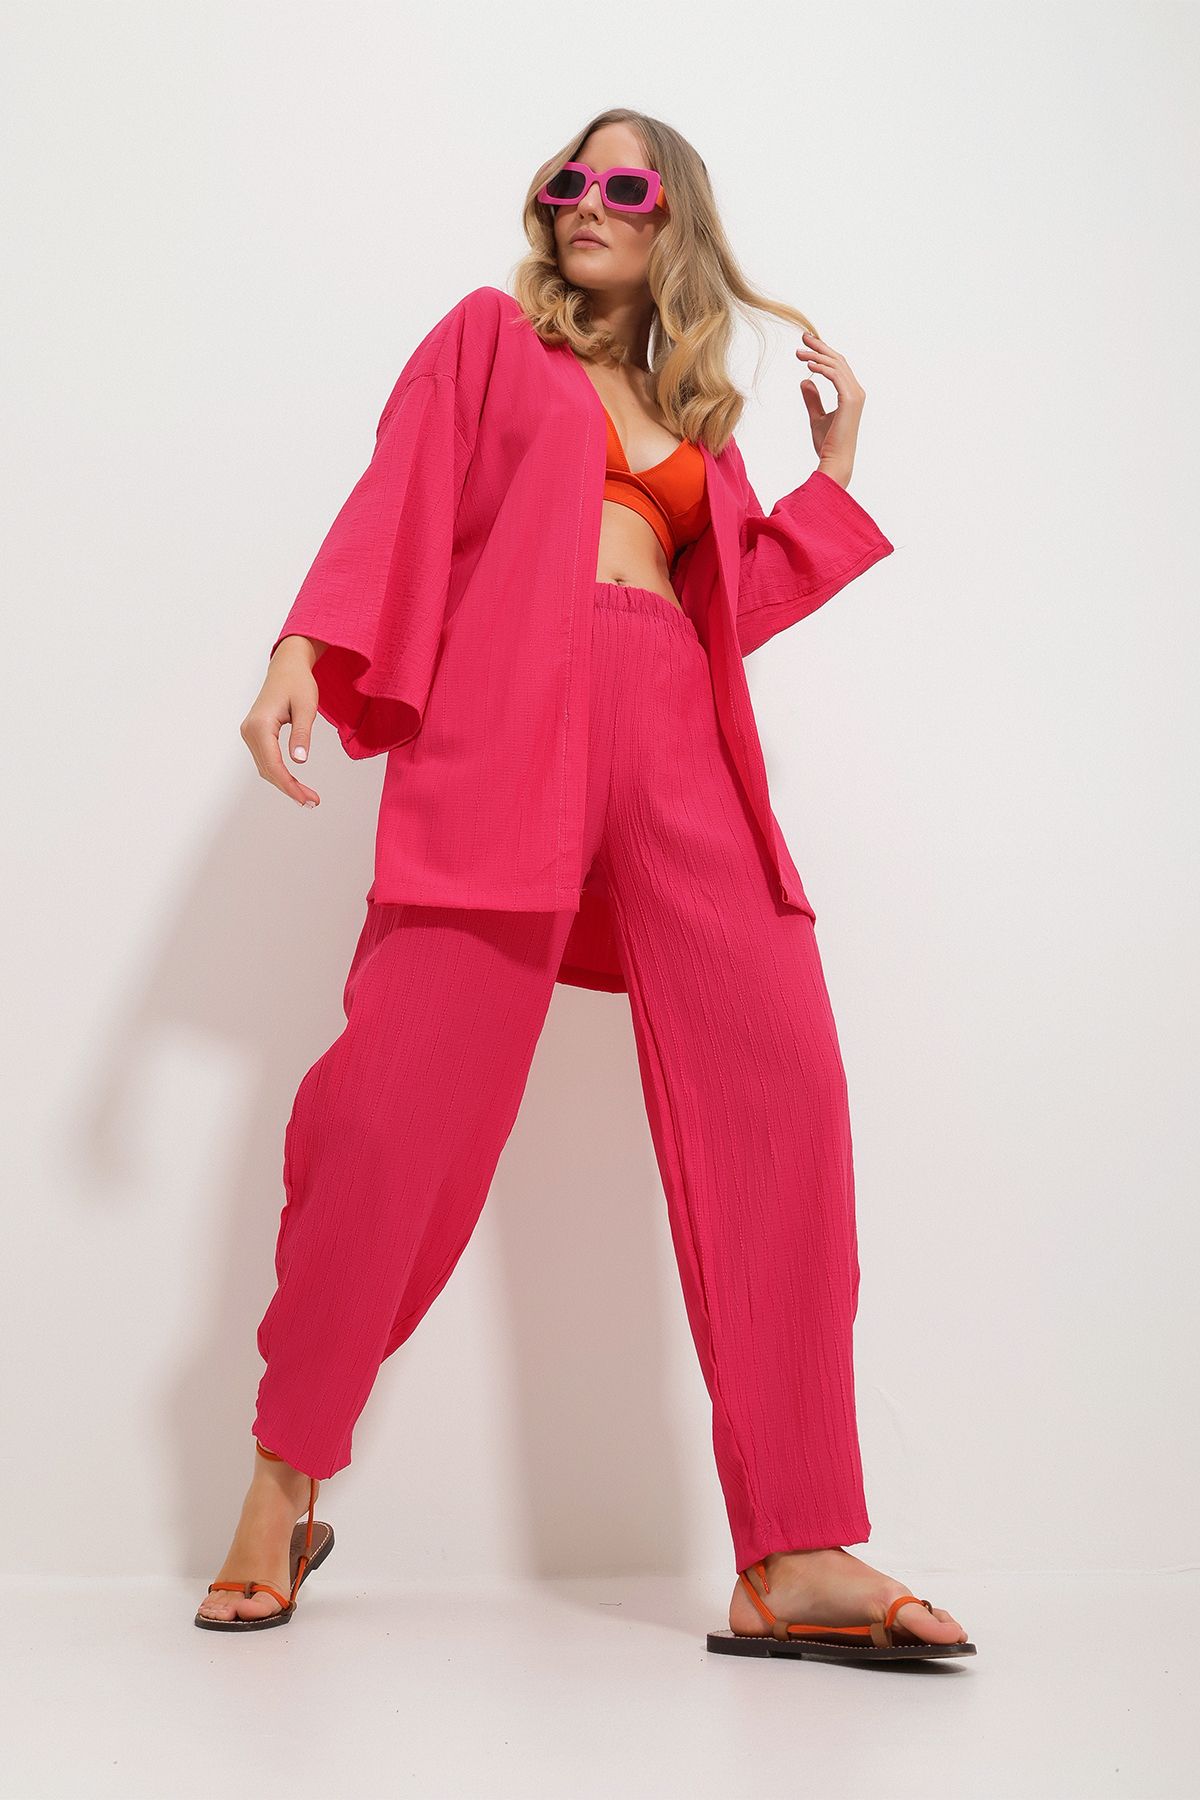 Trend Alaçatı Stili Kadın Fuşya Rahat Kesim Pantolon Kimono Ceket Dokuma İkili Takım Alc-X11694